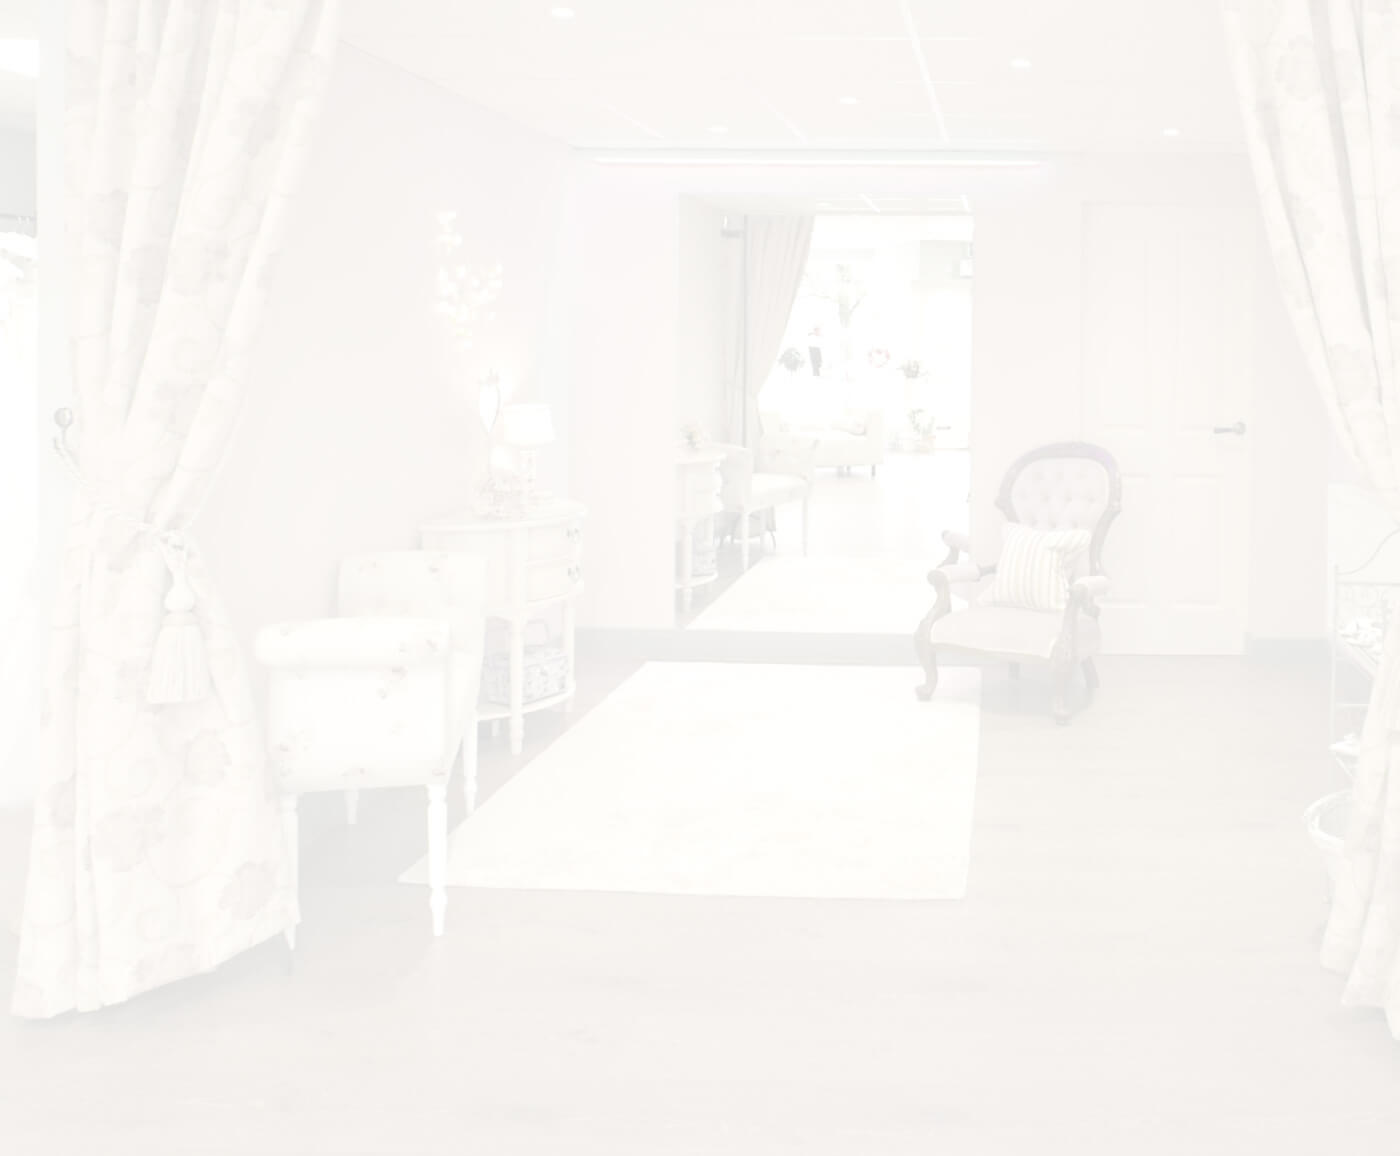 Photo of Bicester Bridal Showroom Interior